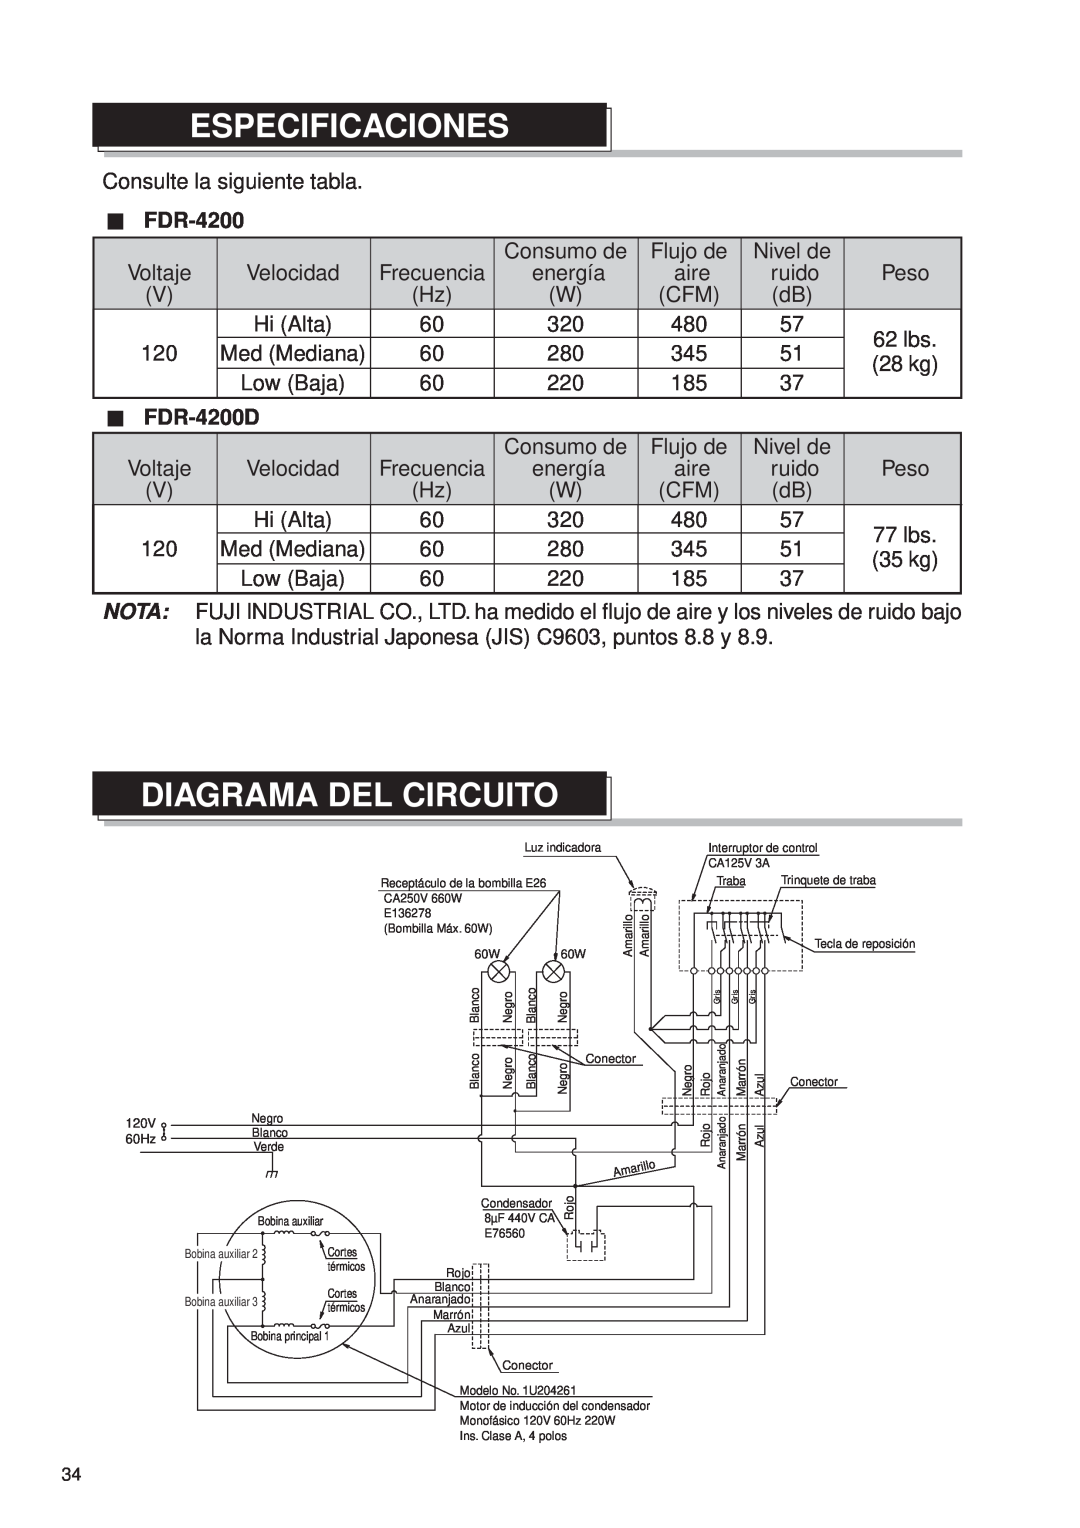 Fujioh FDR-4200D operation manual Especificaciones, Diagrama Del Circuito 